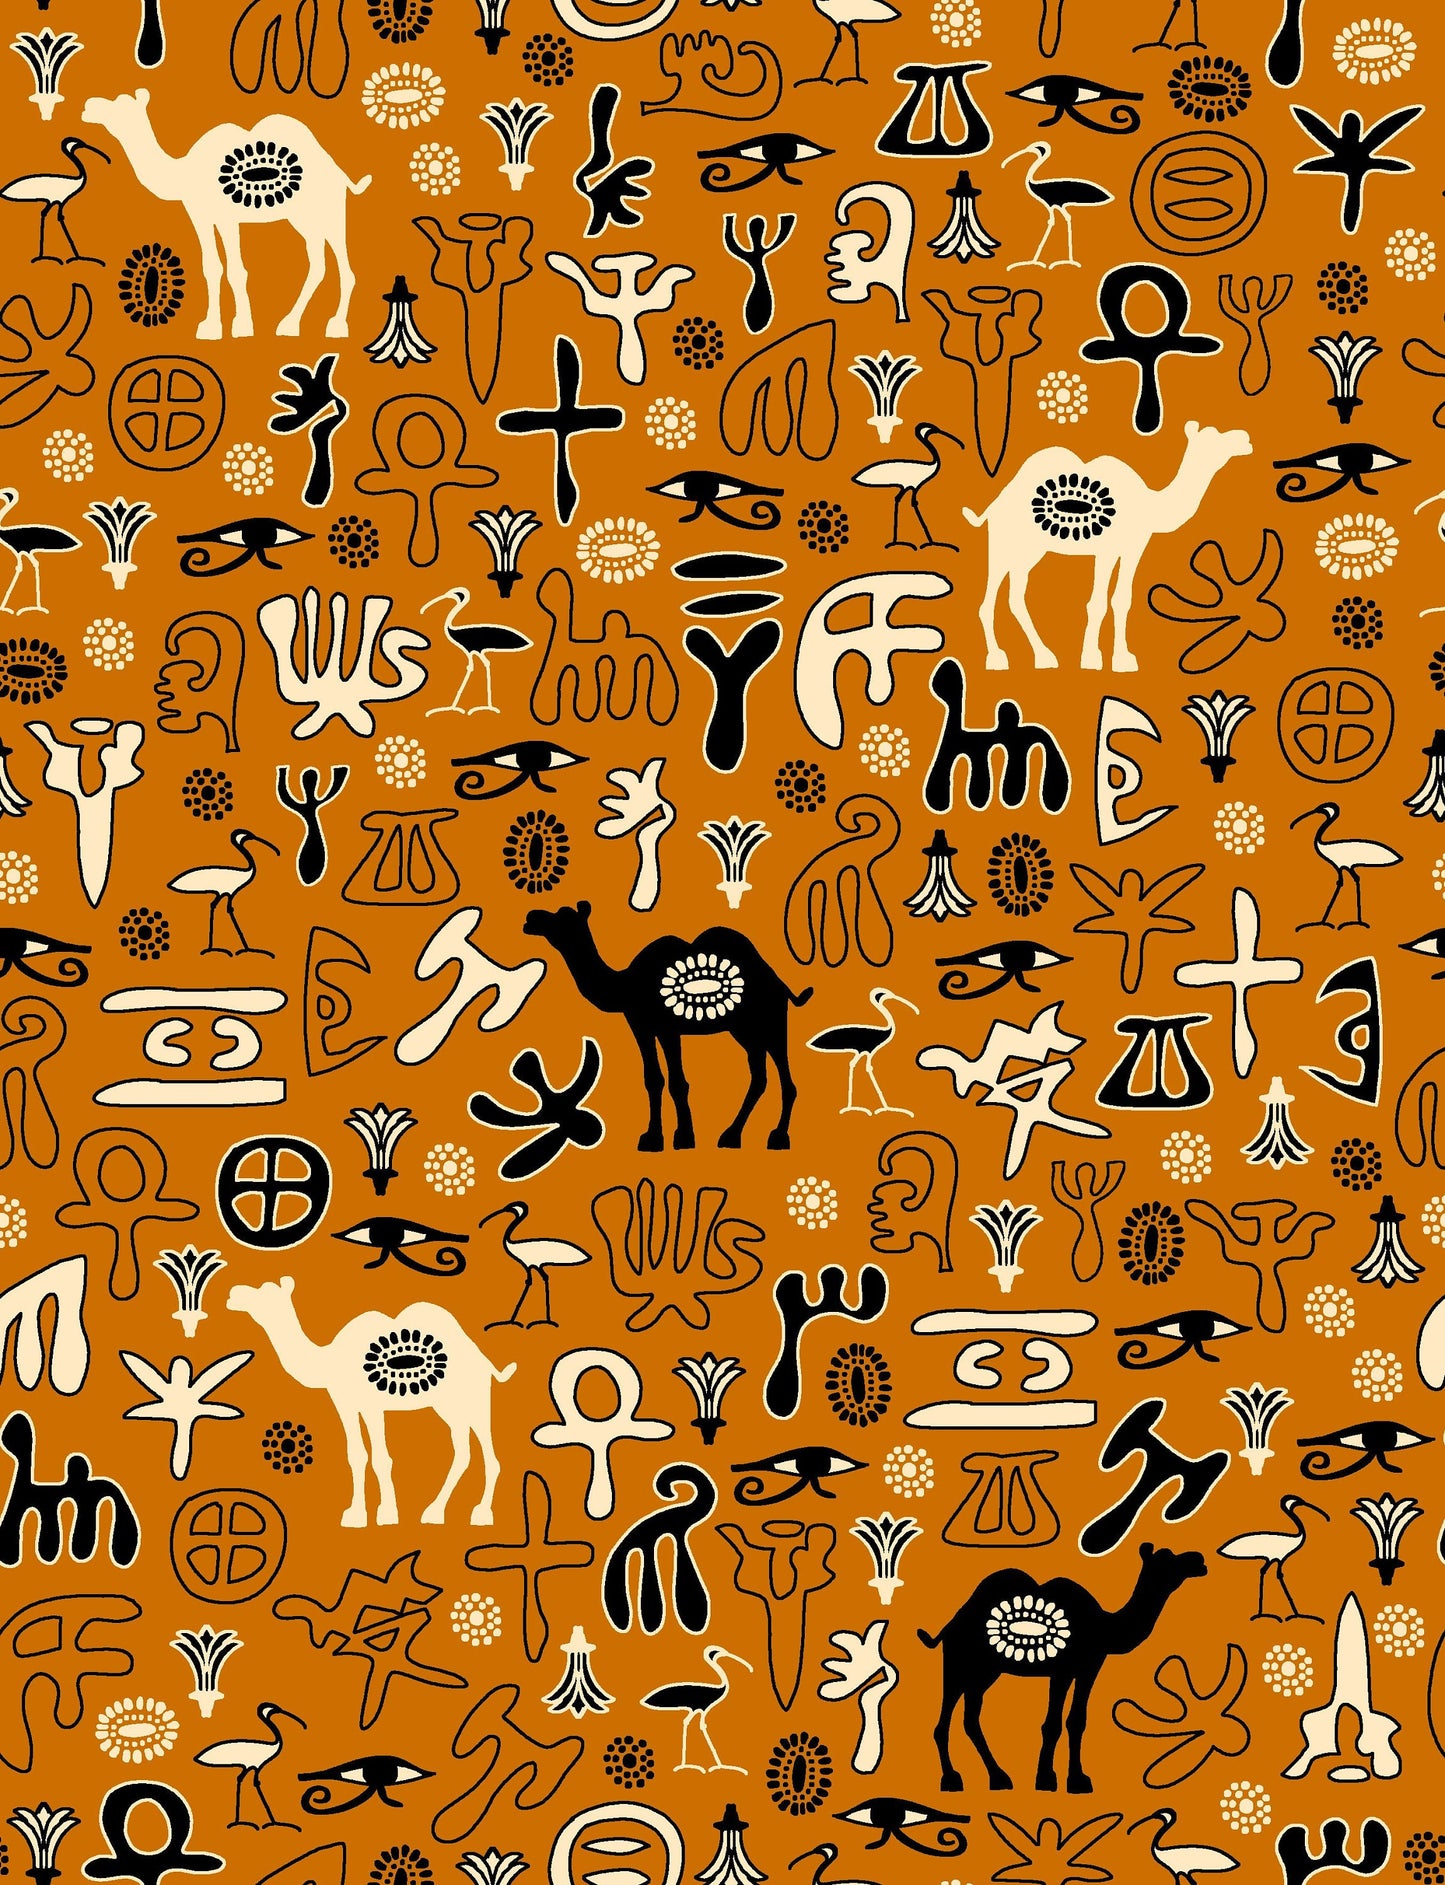 The Eye of Egypt Black and Cream Coloured Egyptian Motifs on Orange 4501-400 Digitally Printed Cotton Woven Fabric